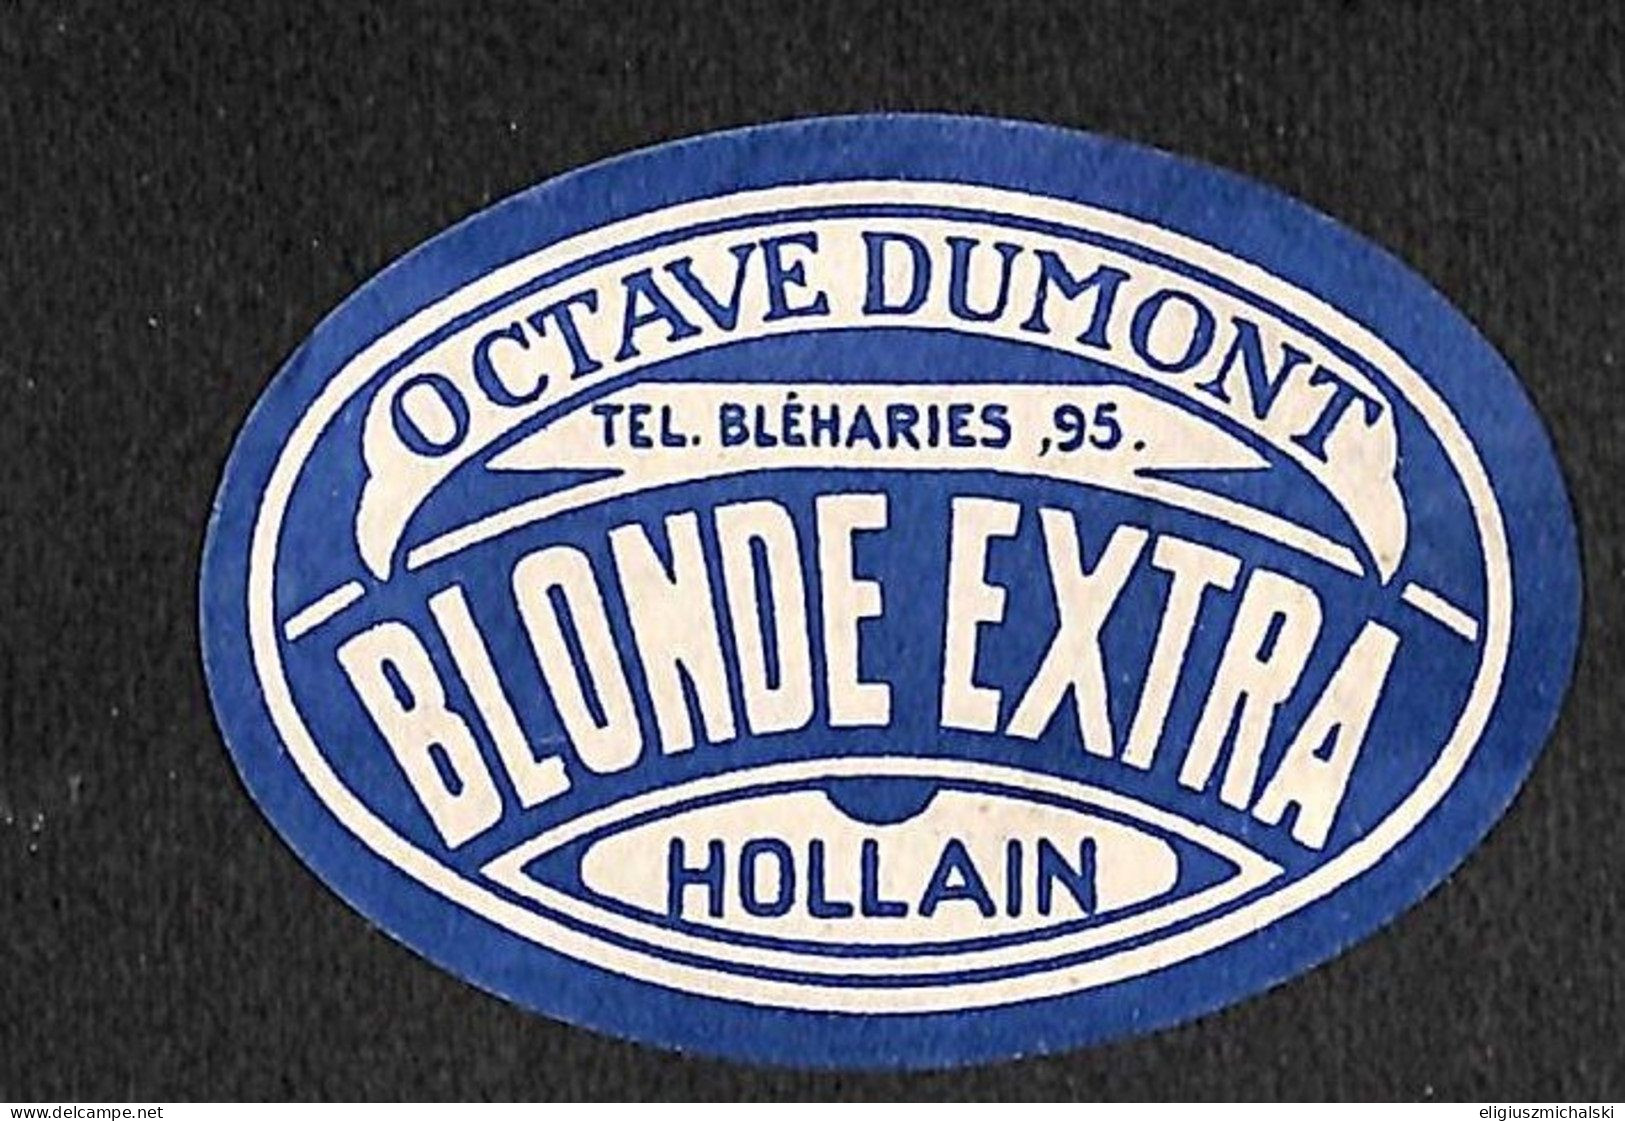 Hollain - Dumont Octave Blonde Extra - Cerveza